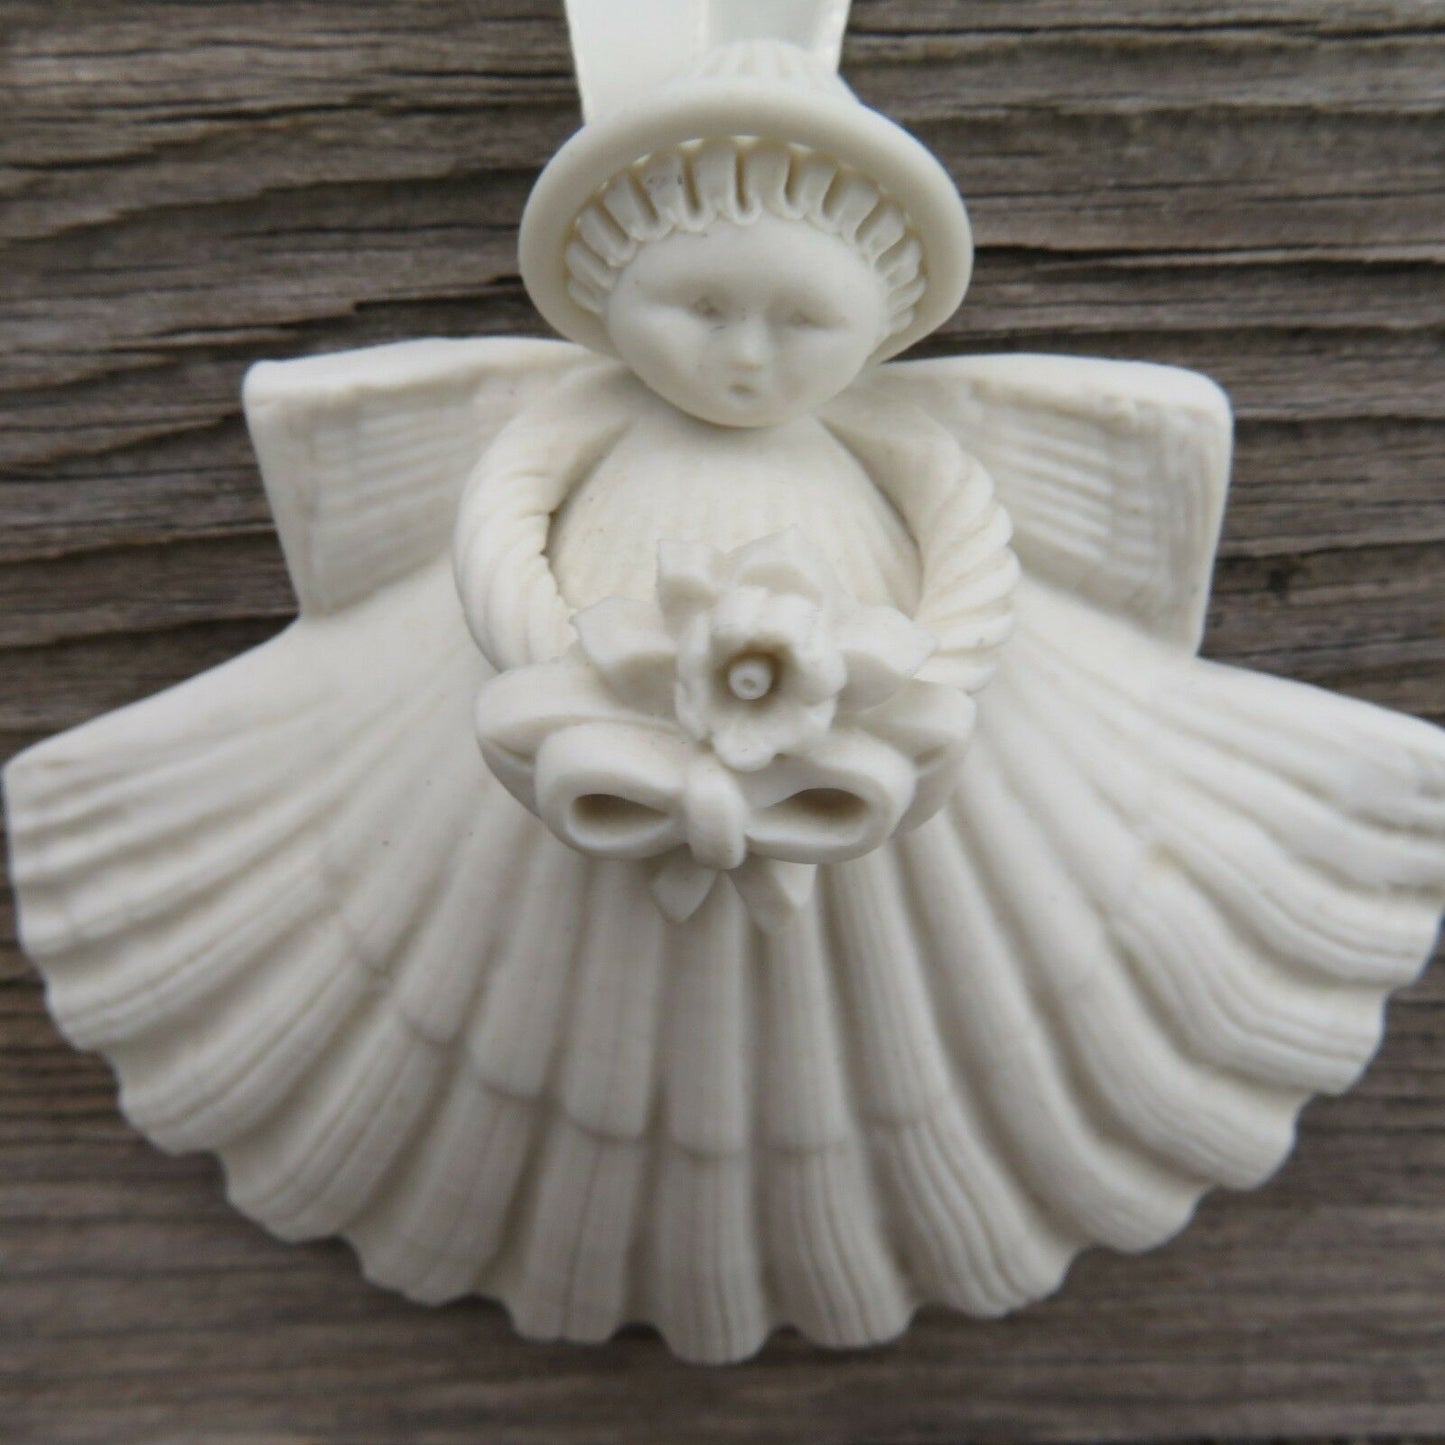 Vintage Shell Angel Christmas Ornament Margaret Furlong Iris 1997 Bisque Ceramic - At Grandma's Table